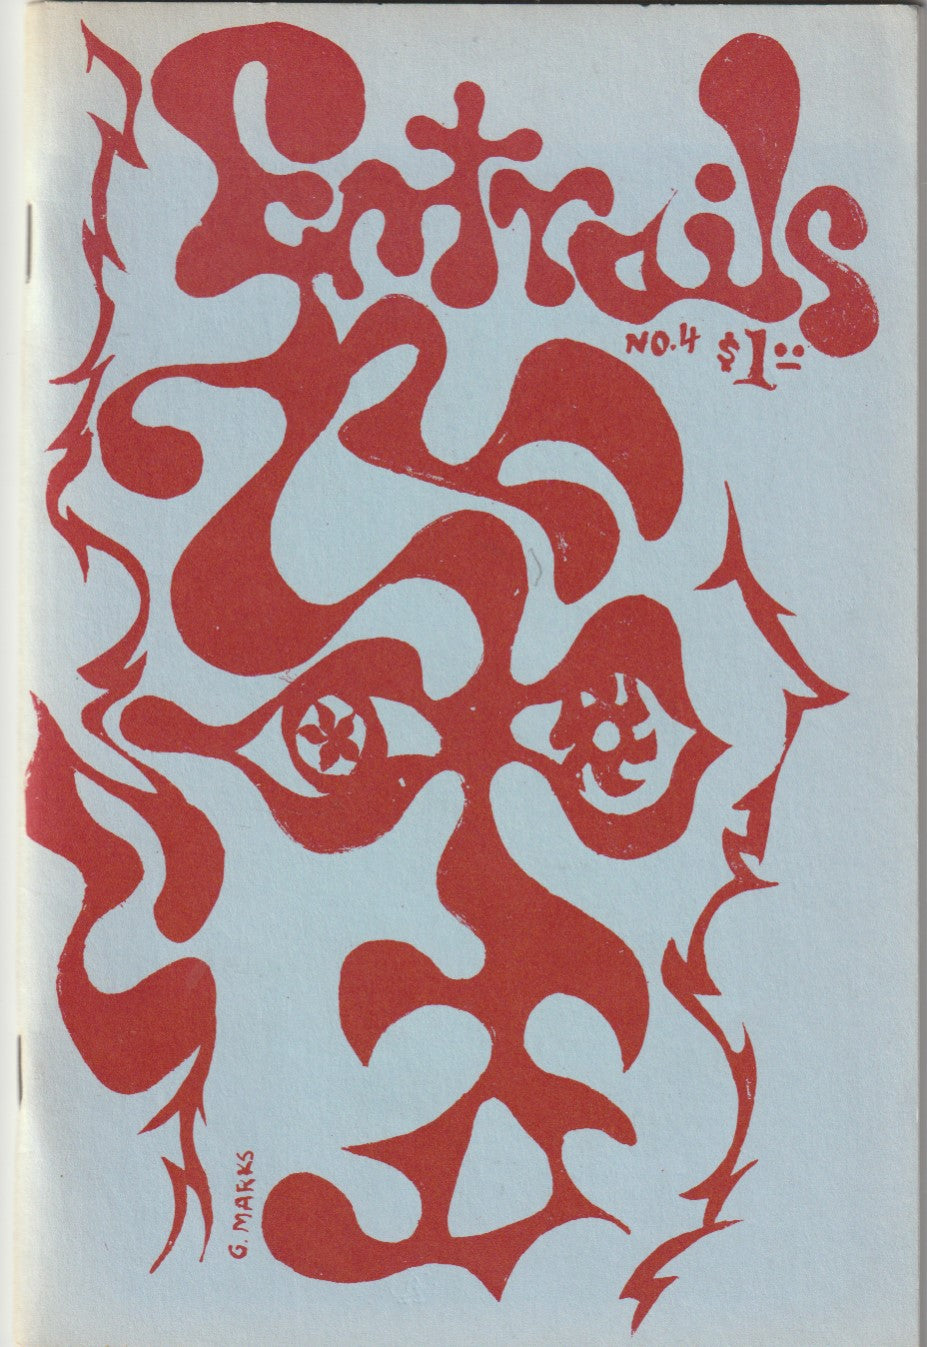 Entrails 4 -- One Uncollected Charles Bukowski Poem (1967)